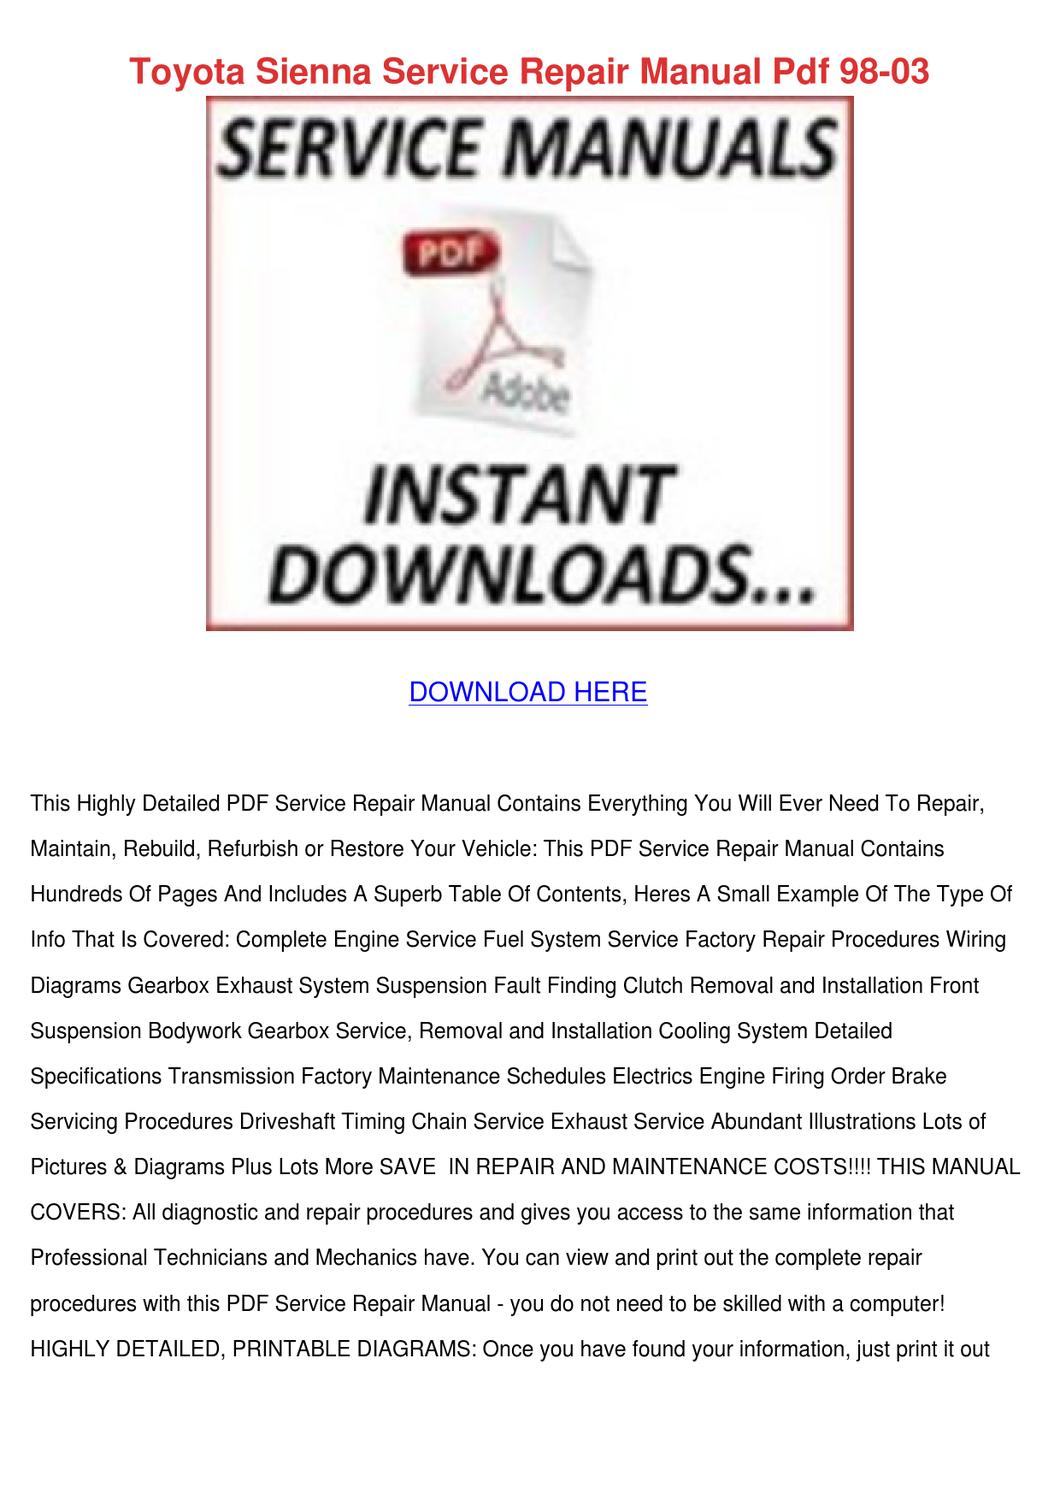 Toyota sienna service manual pdf